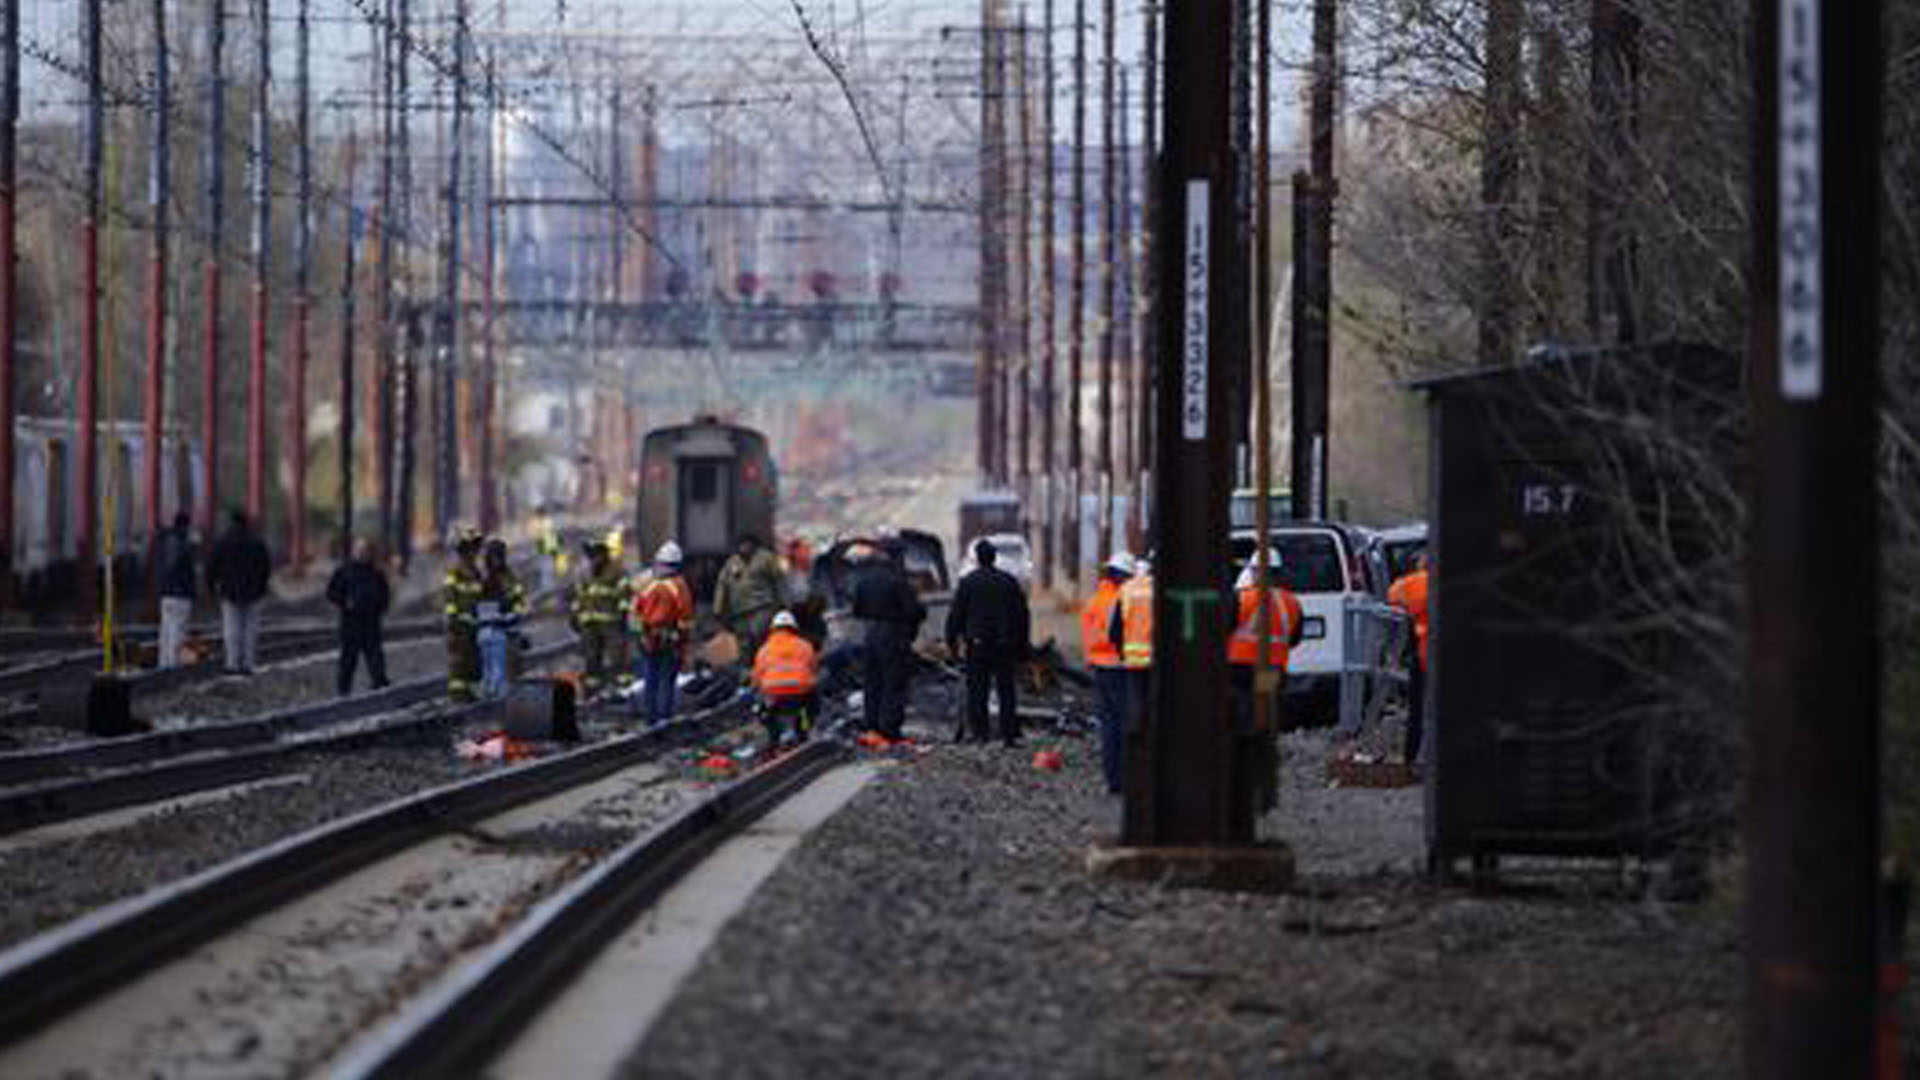 Two killed after Amtrak train slams into backhoe | wtsp.com